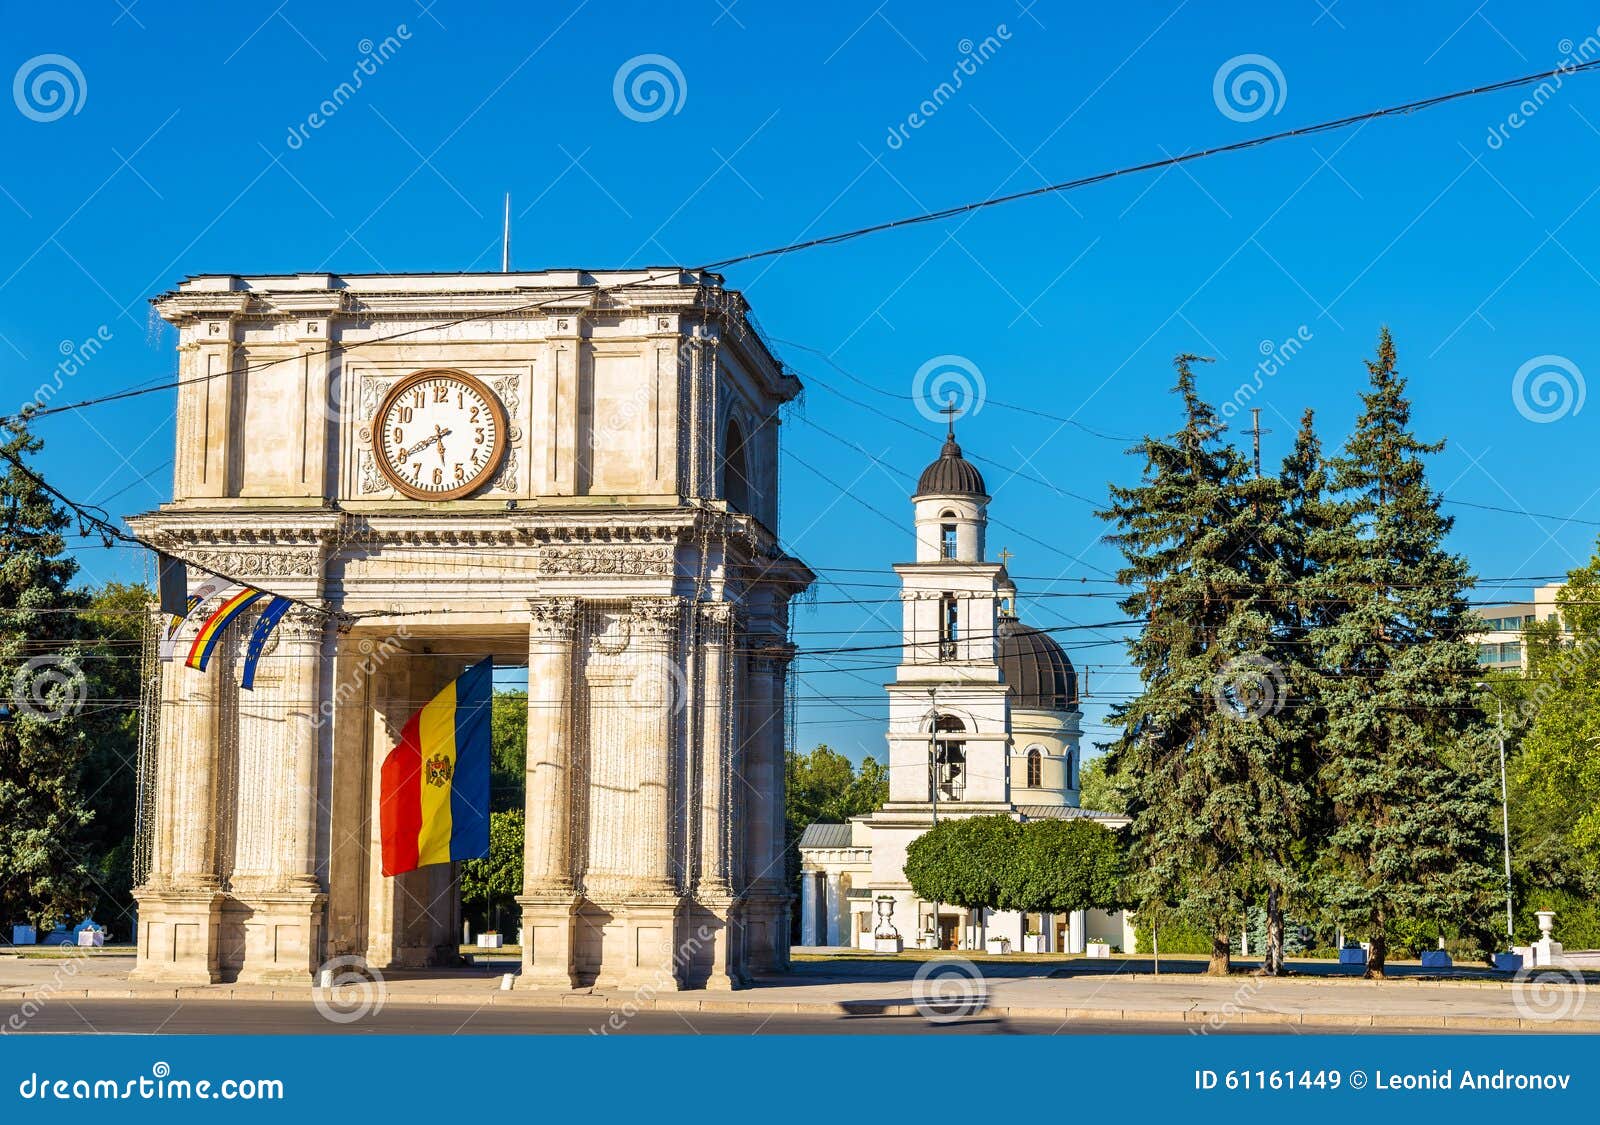 the triumphal arch in chisinau